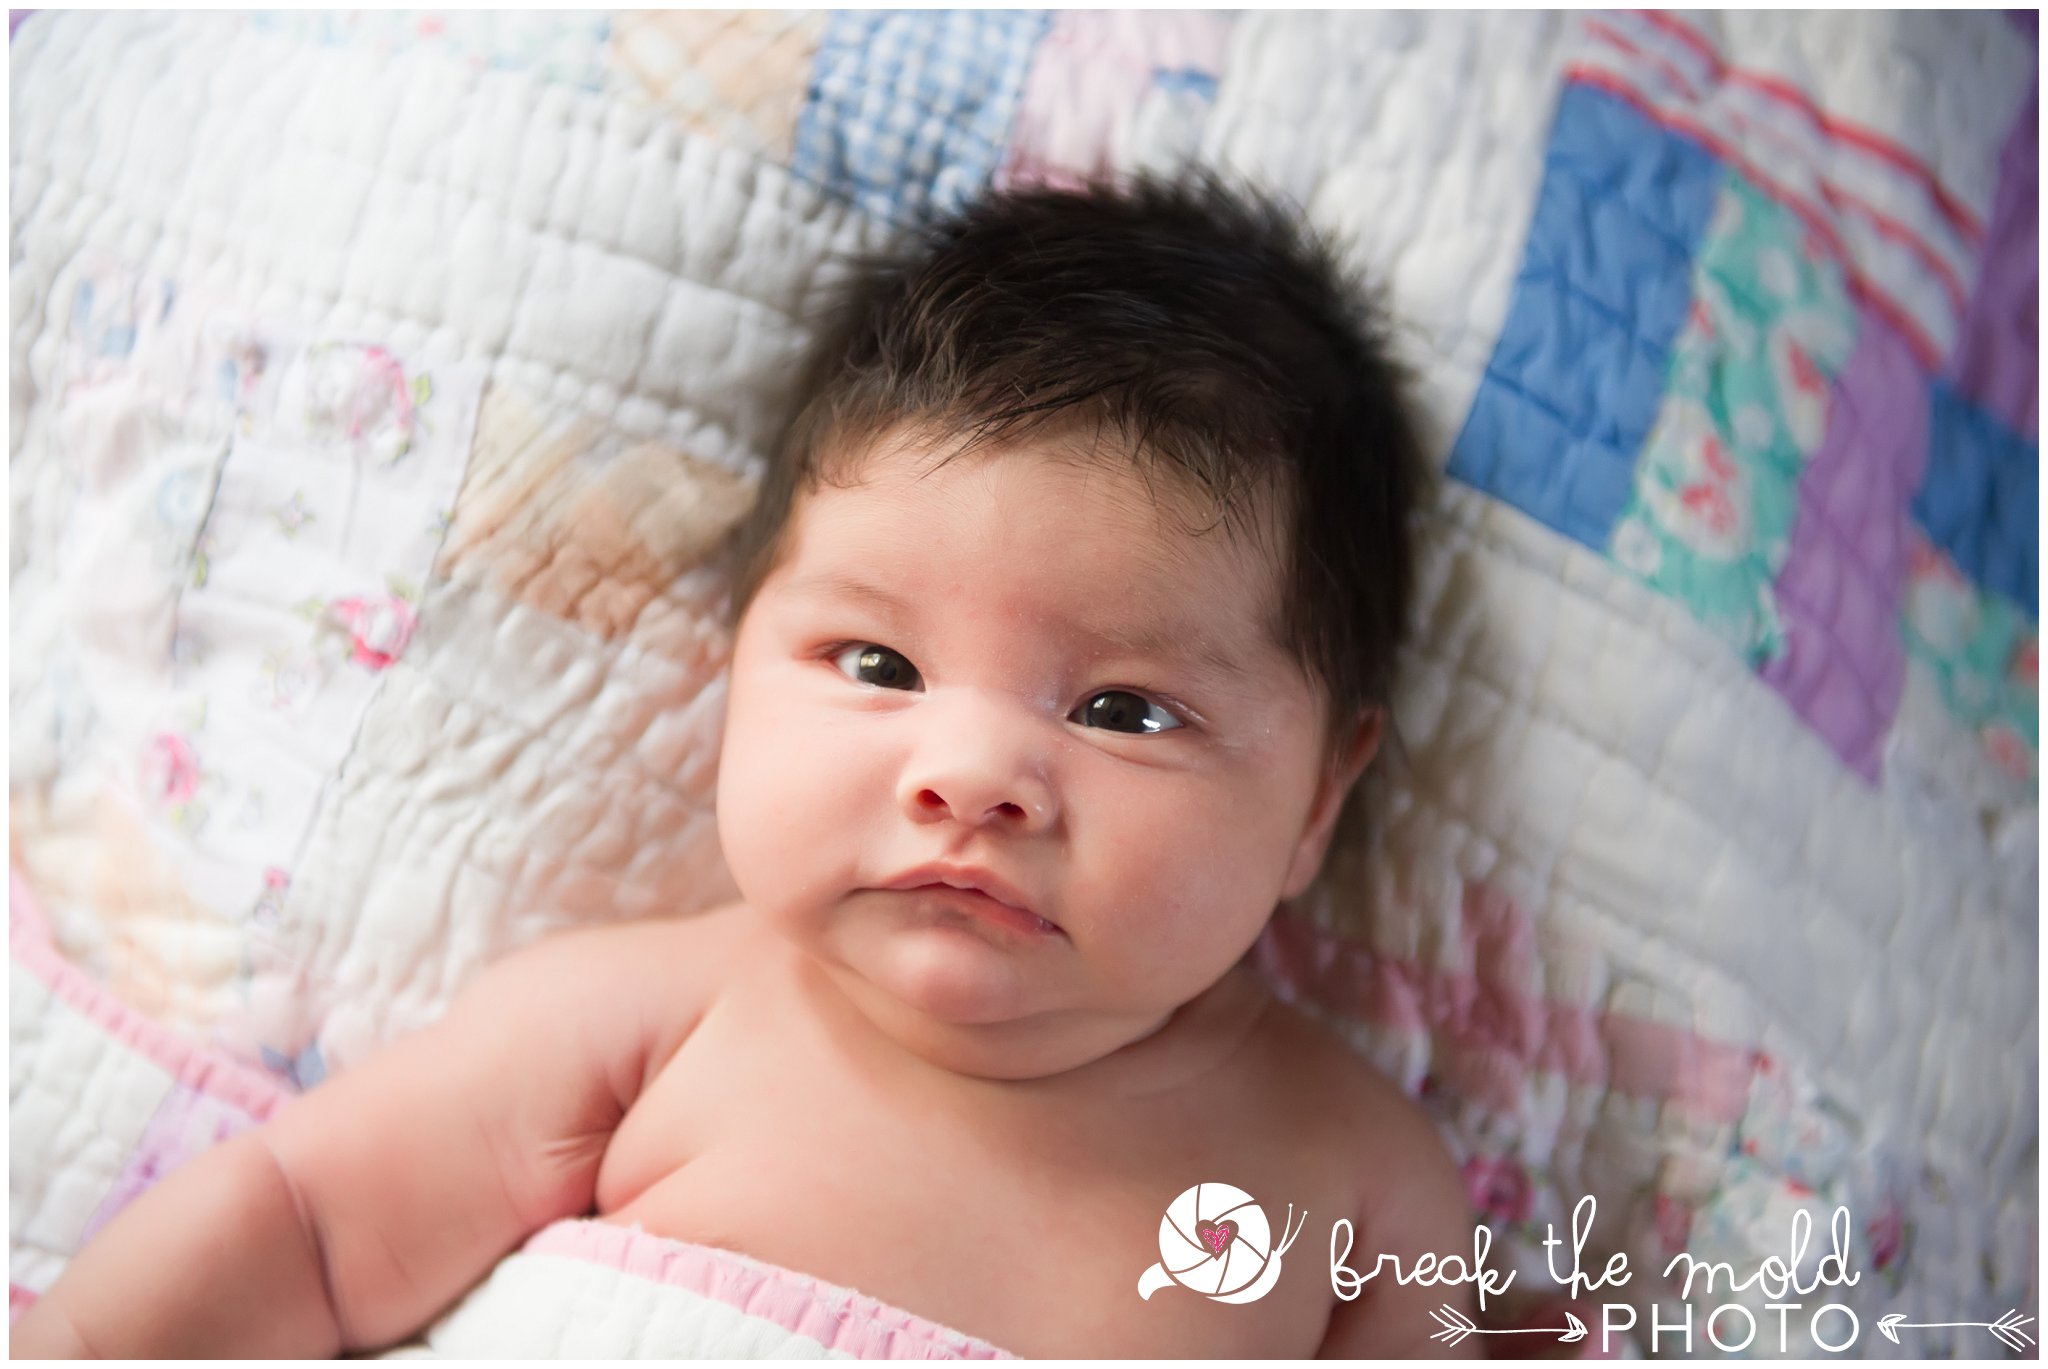 break-the-mold-photo-knoxville-newborn-photographer-creative-affordable-newborn-baby_2885.jpg